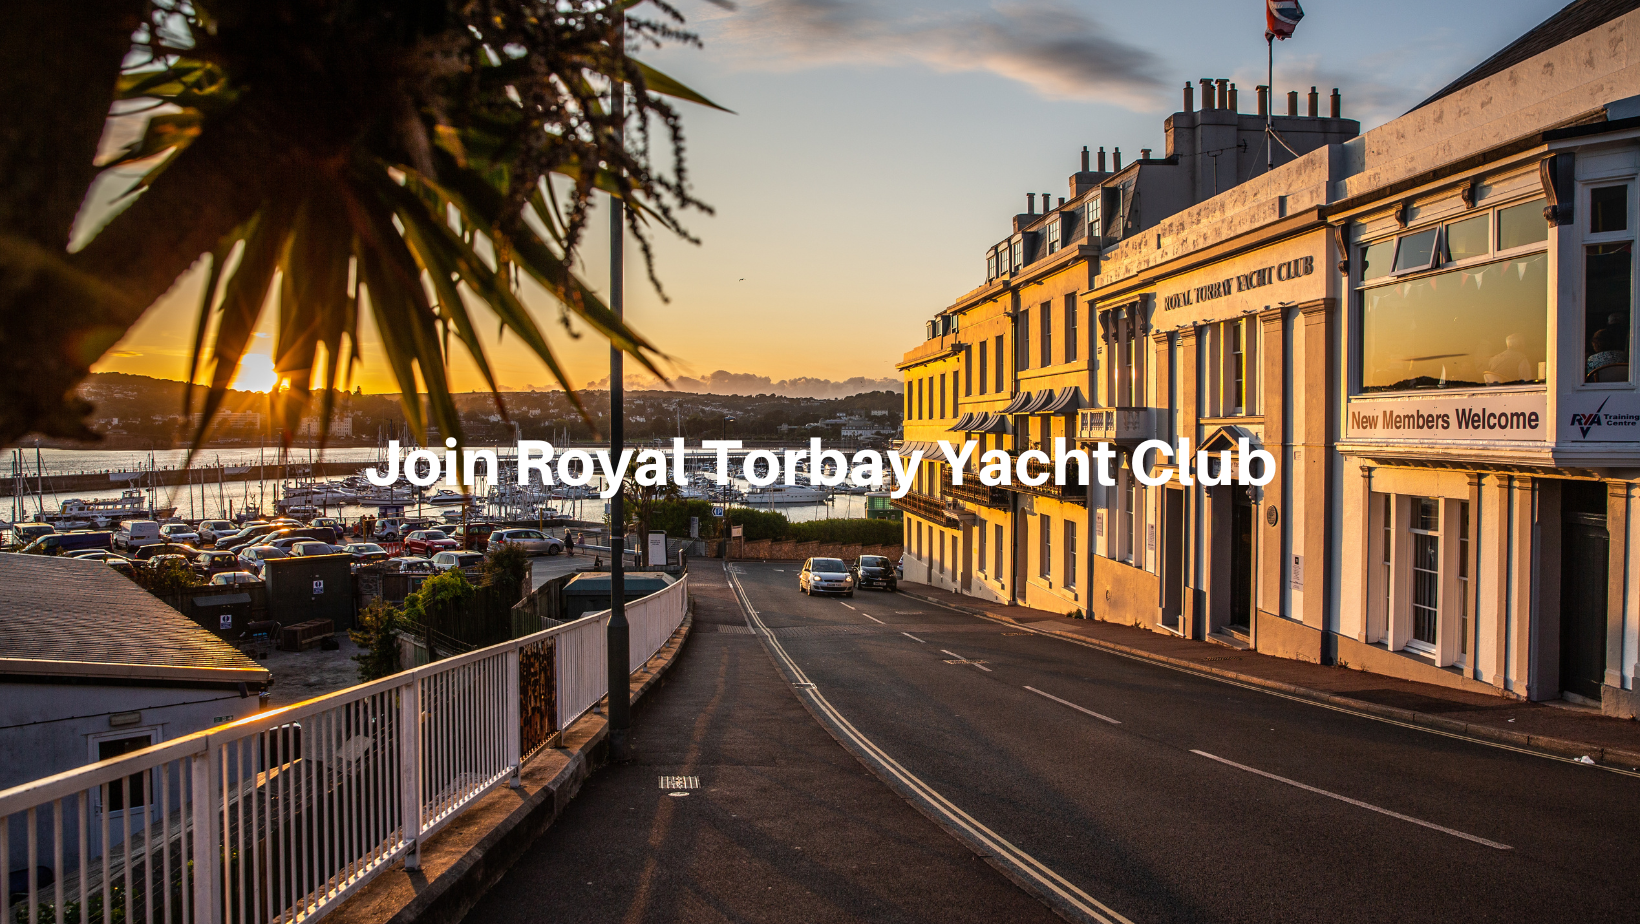 The Royal Torbay Yacht Club 